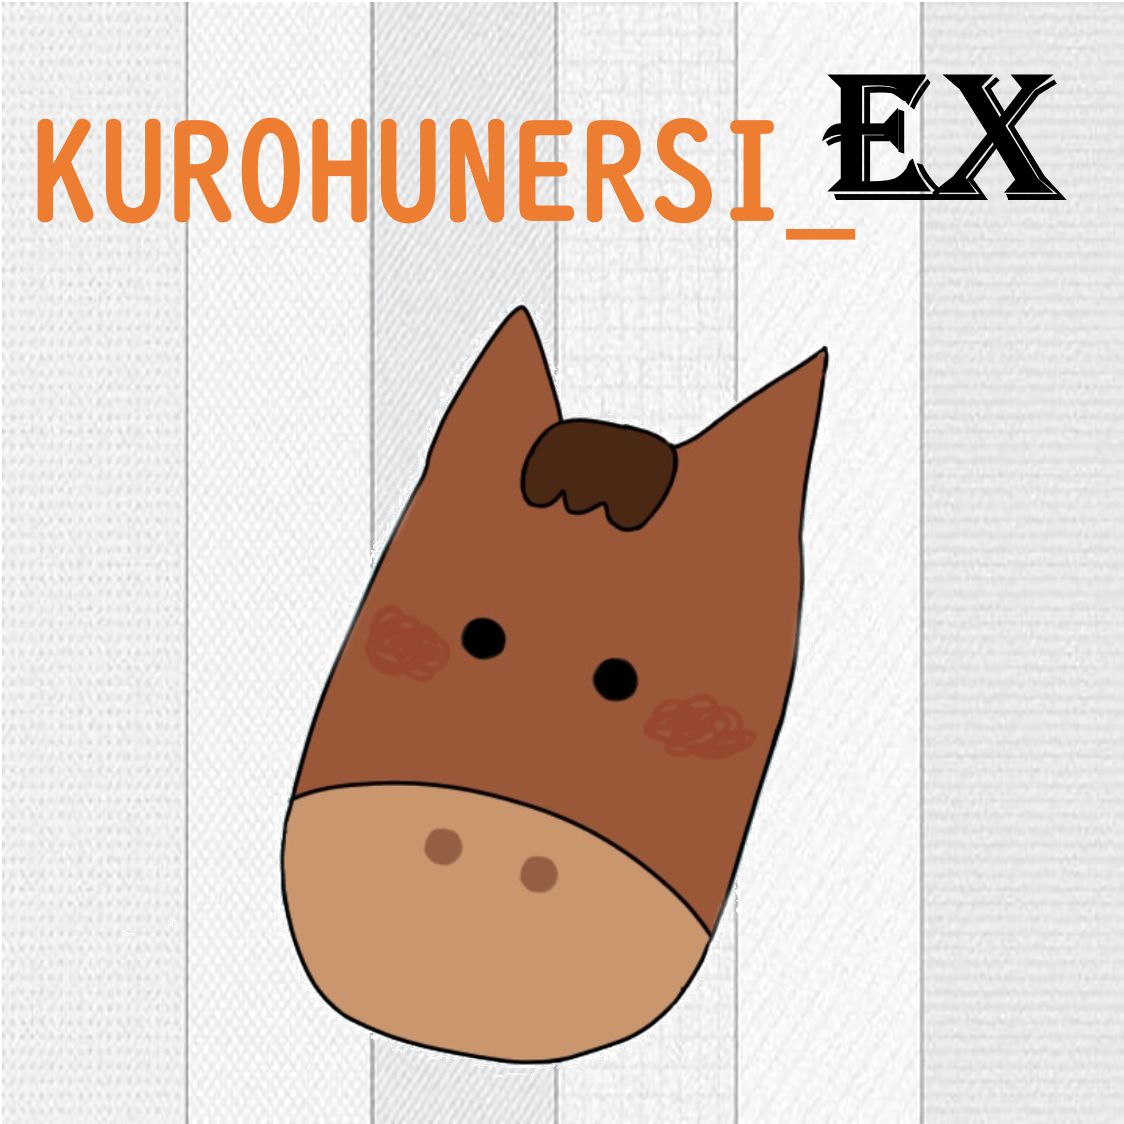 KUROHUNERSI_EX Indicators/E-books